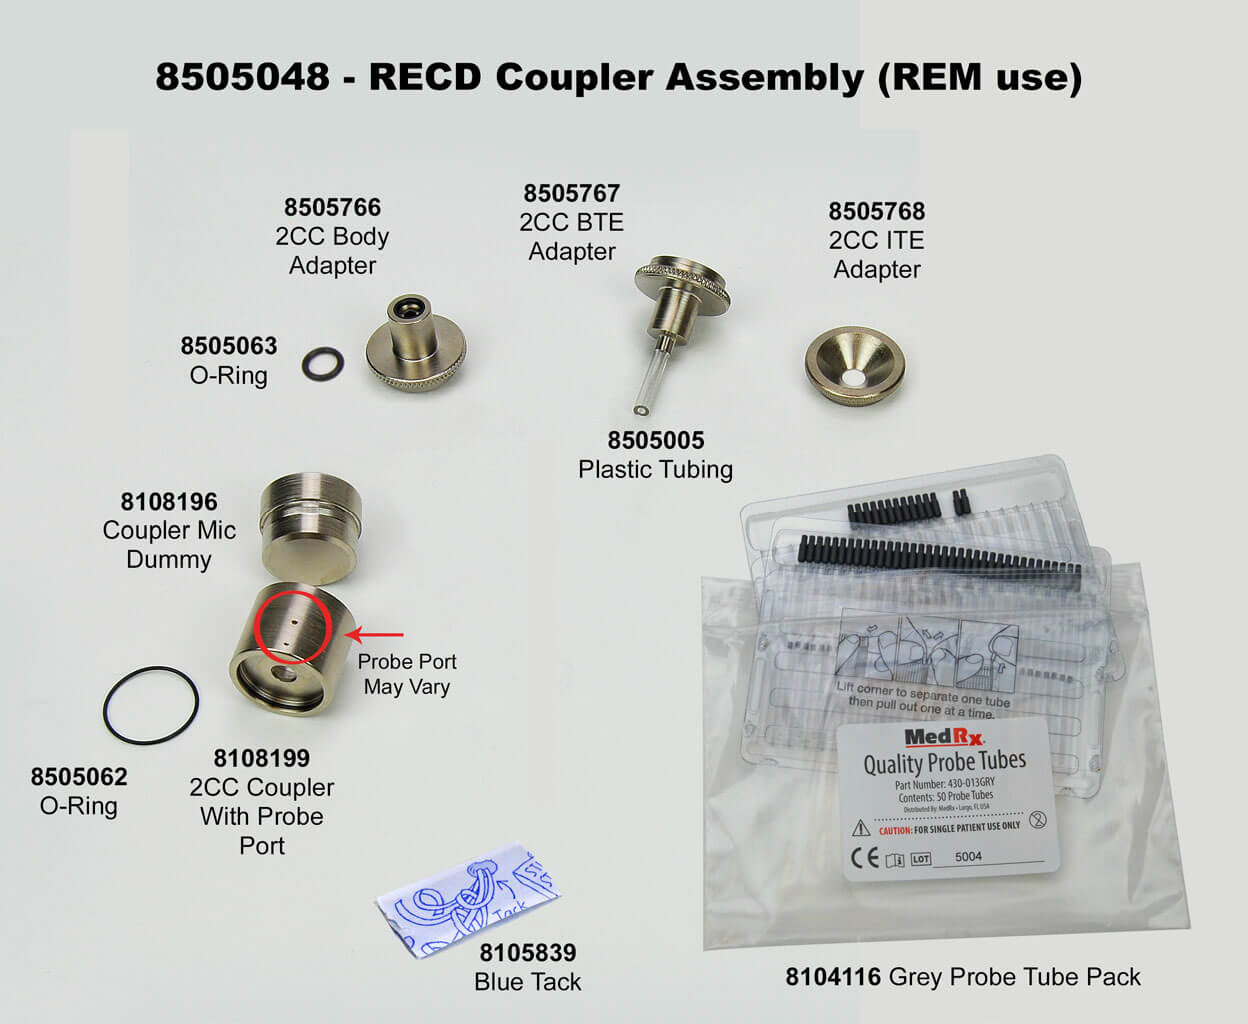 RECD Coupler Assembly Part# 8505048